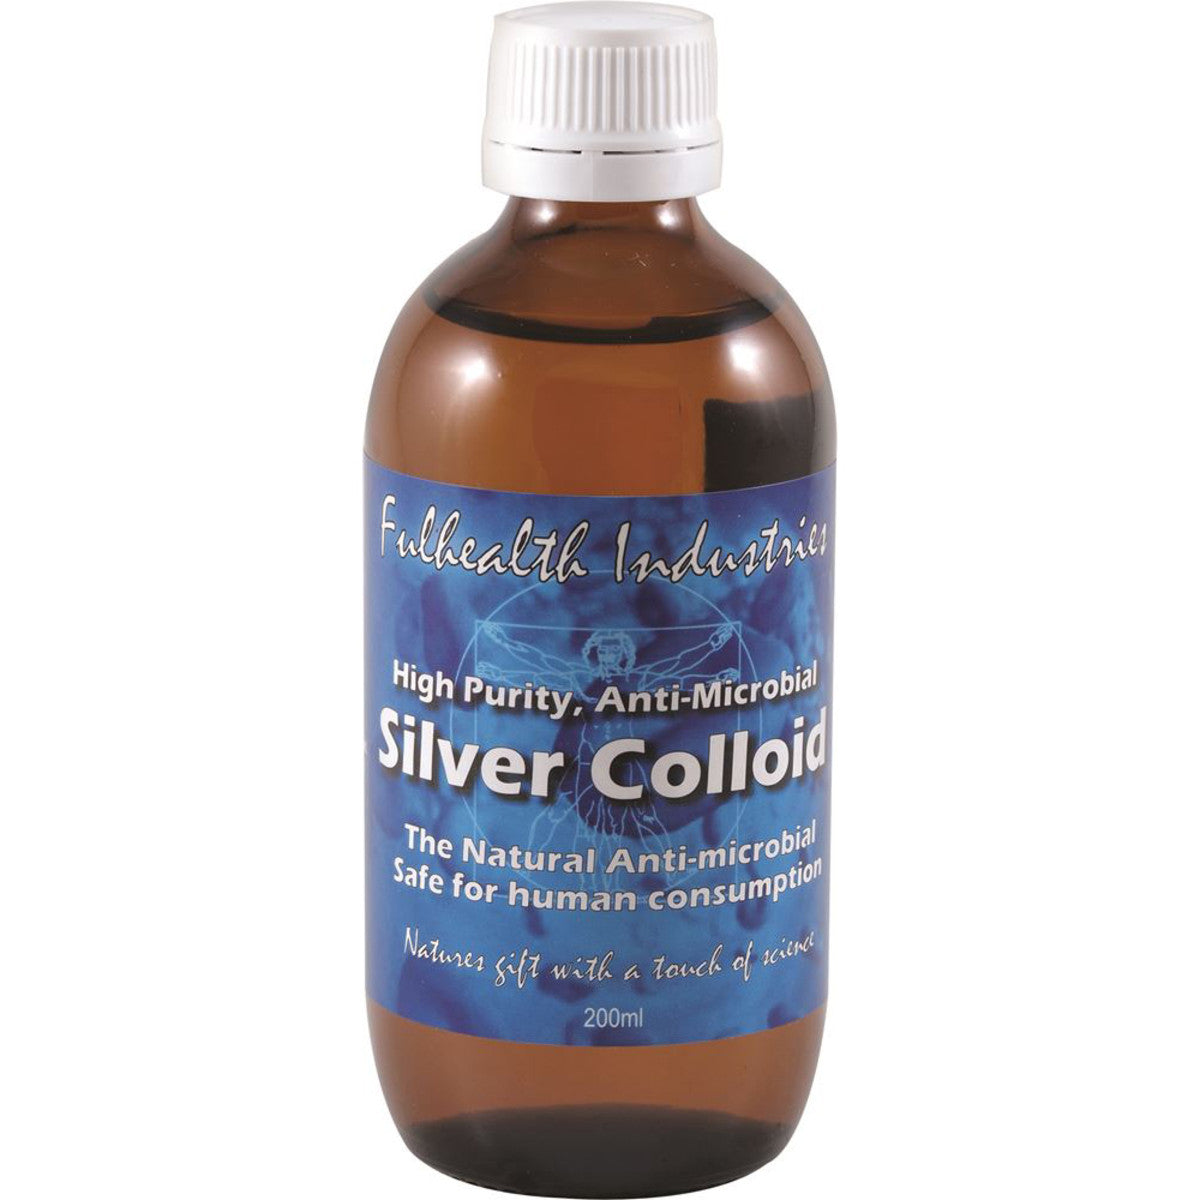 Fulhealth Industries - Silver Colloid